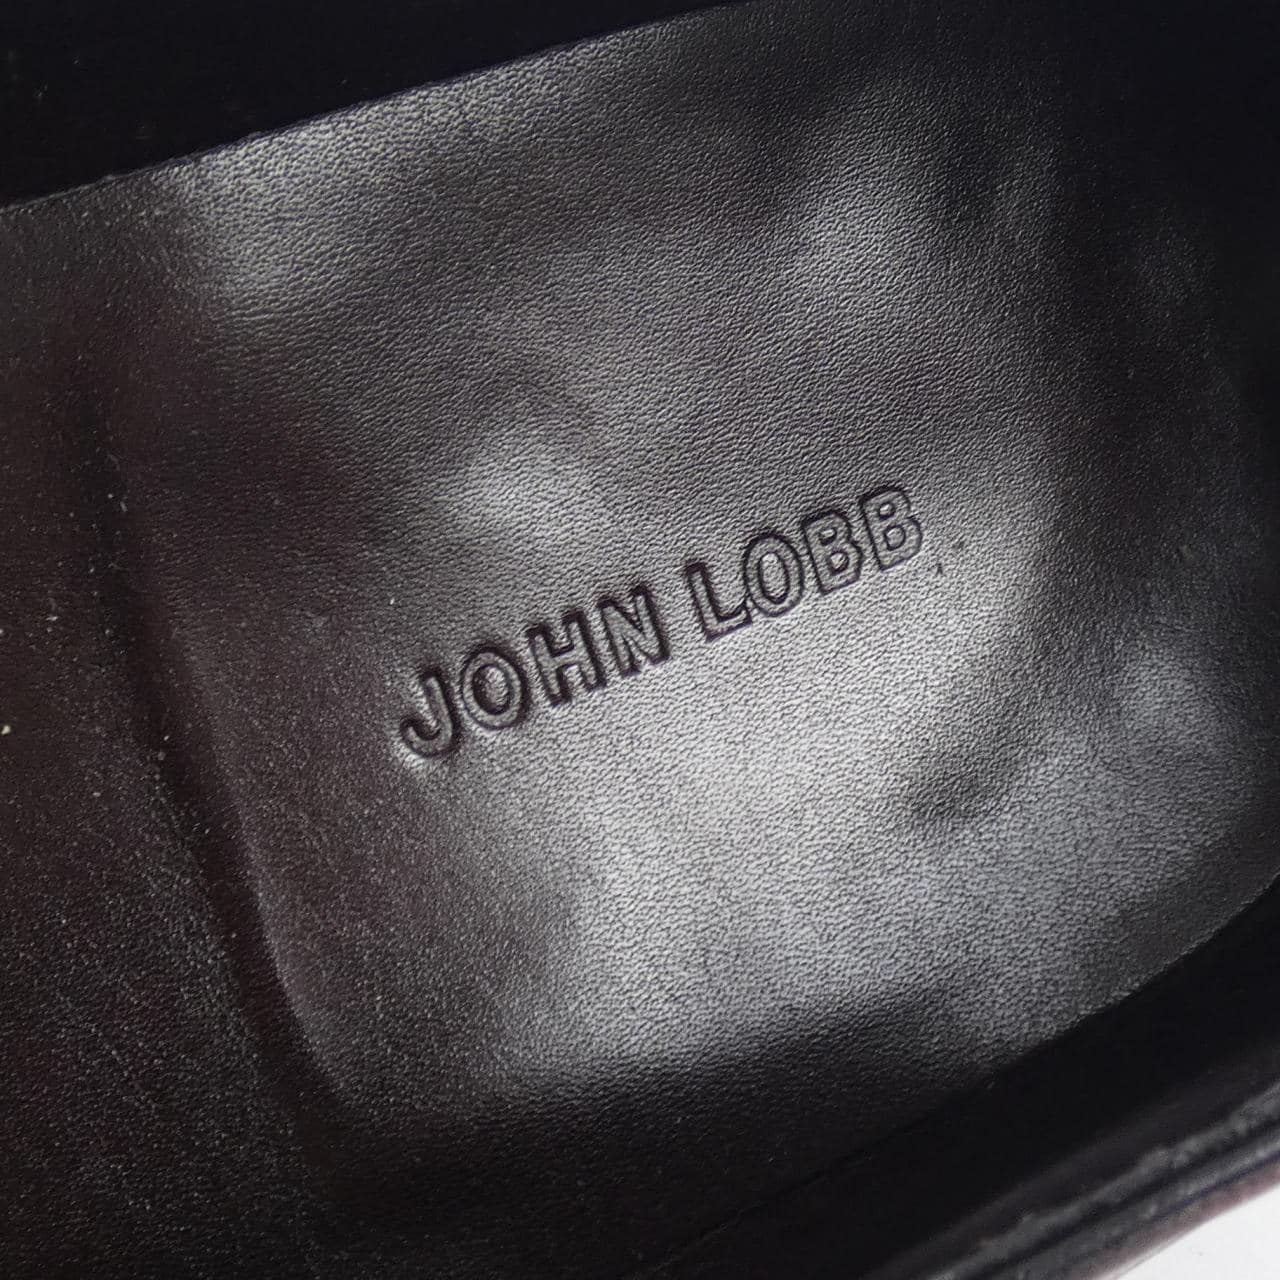 John Lobb JOHN LOBB shoes